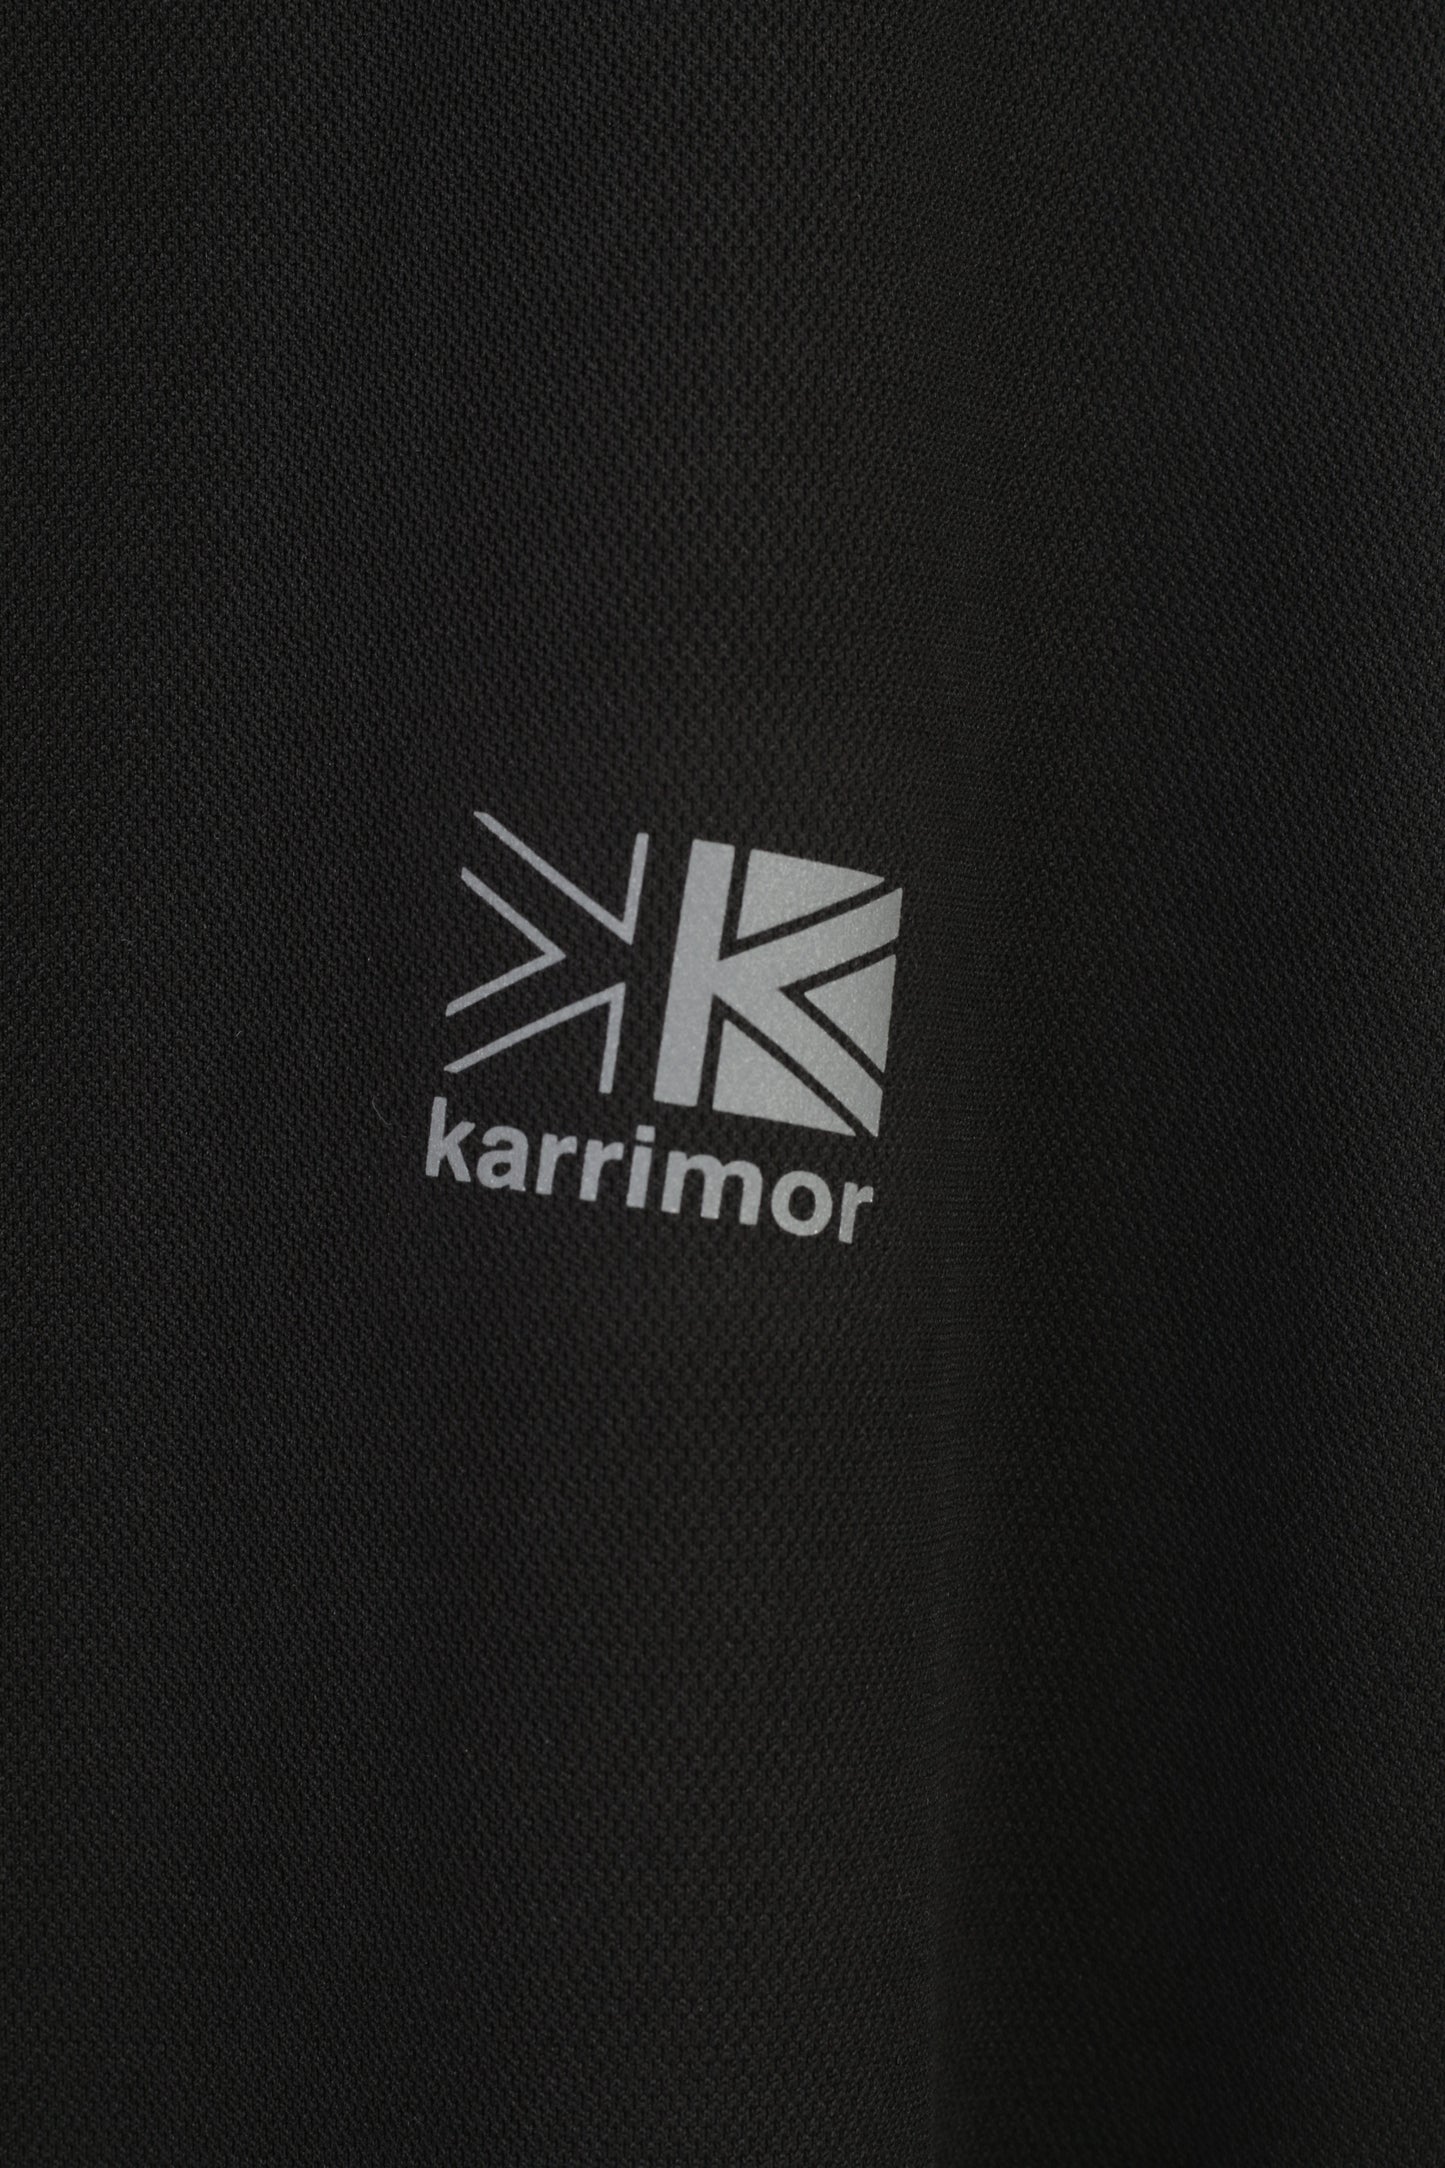 Karrimor Run Men M T-Shirt Black Crew Neck Sport Training Vintage Short Sleeve Top